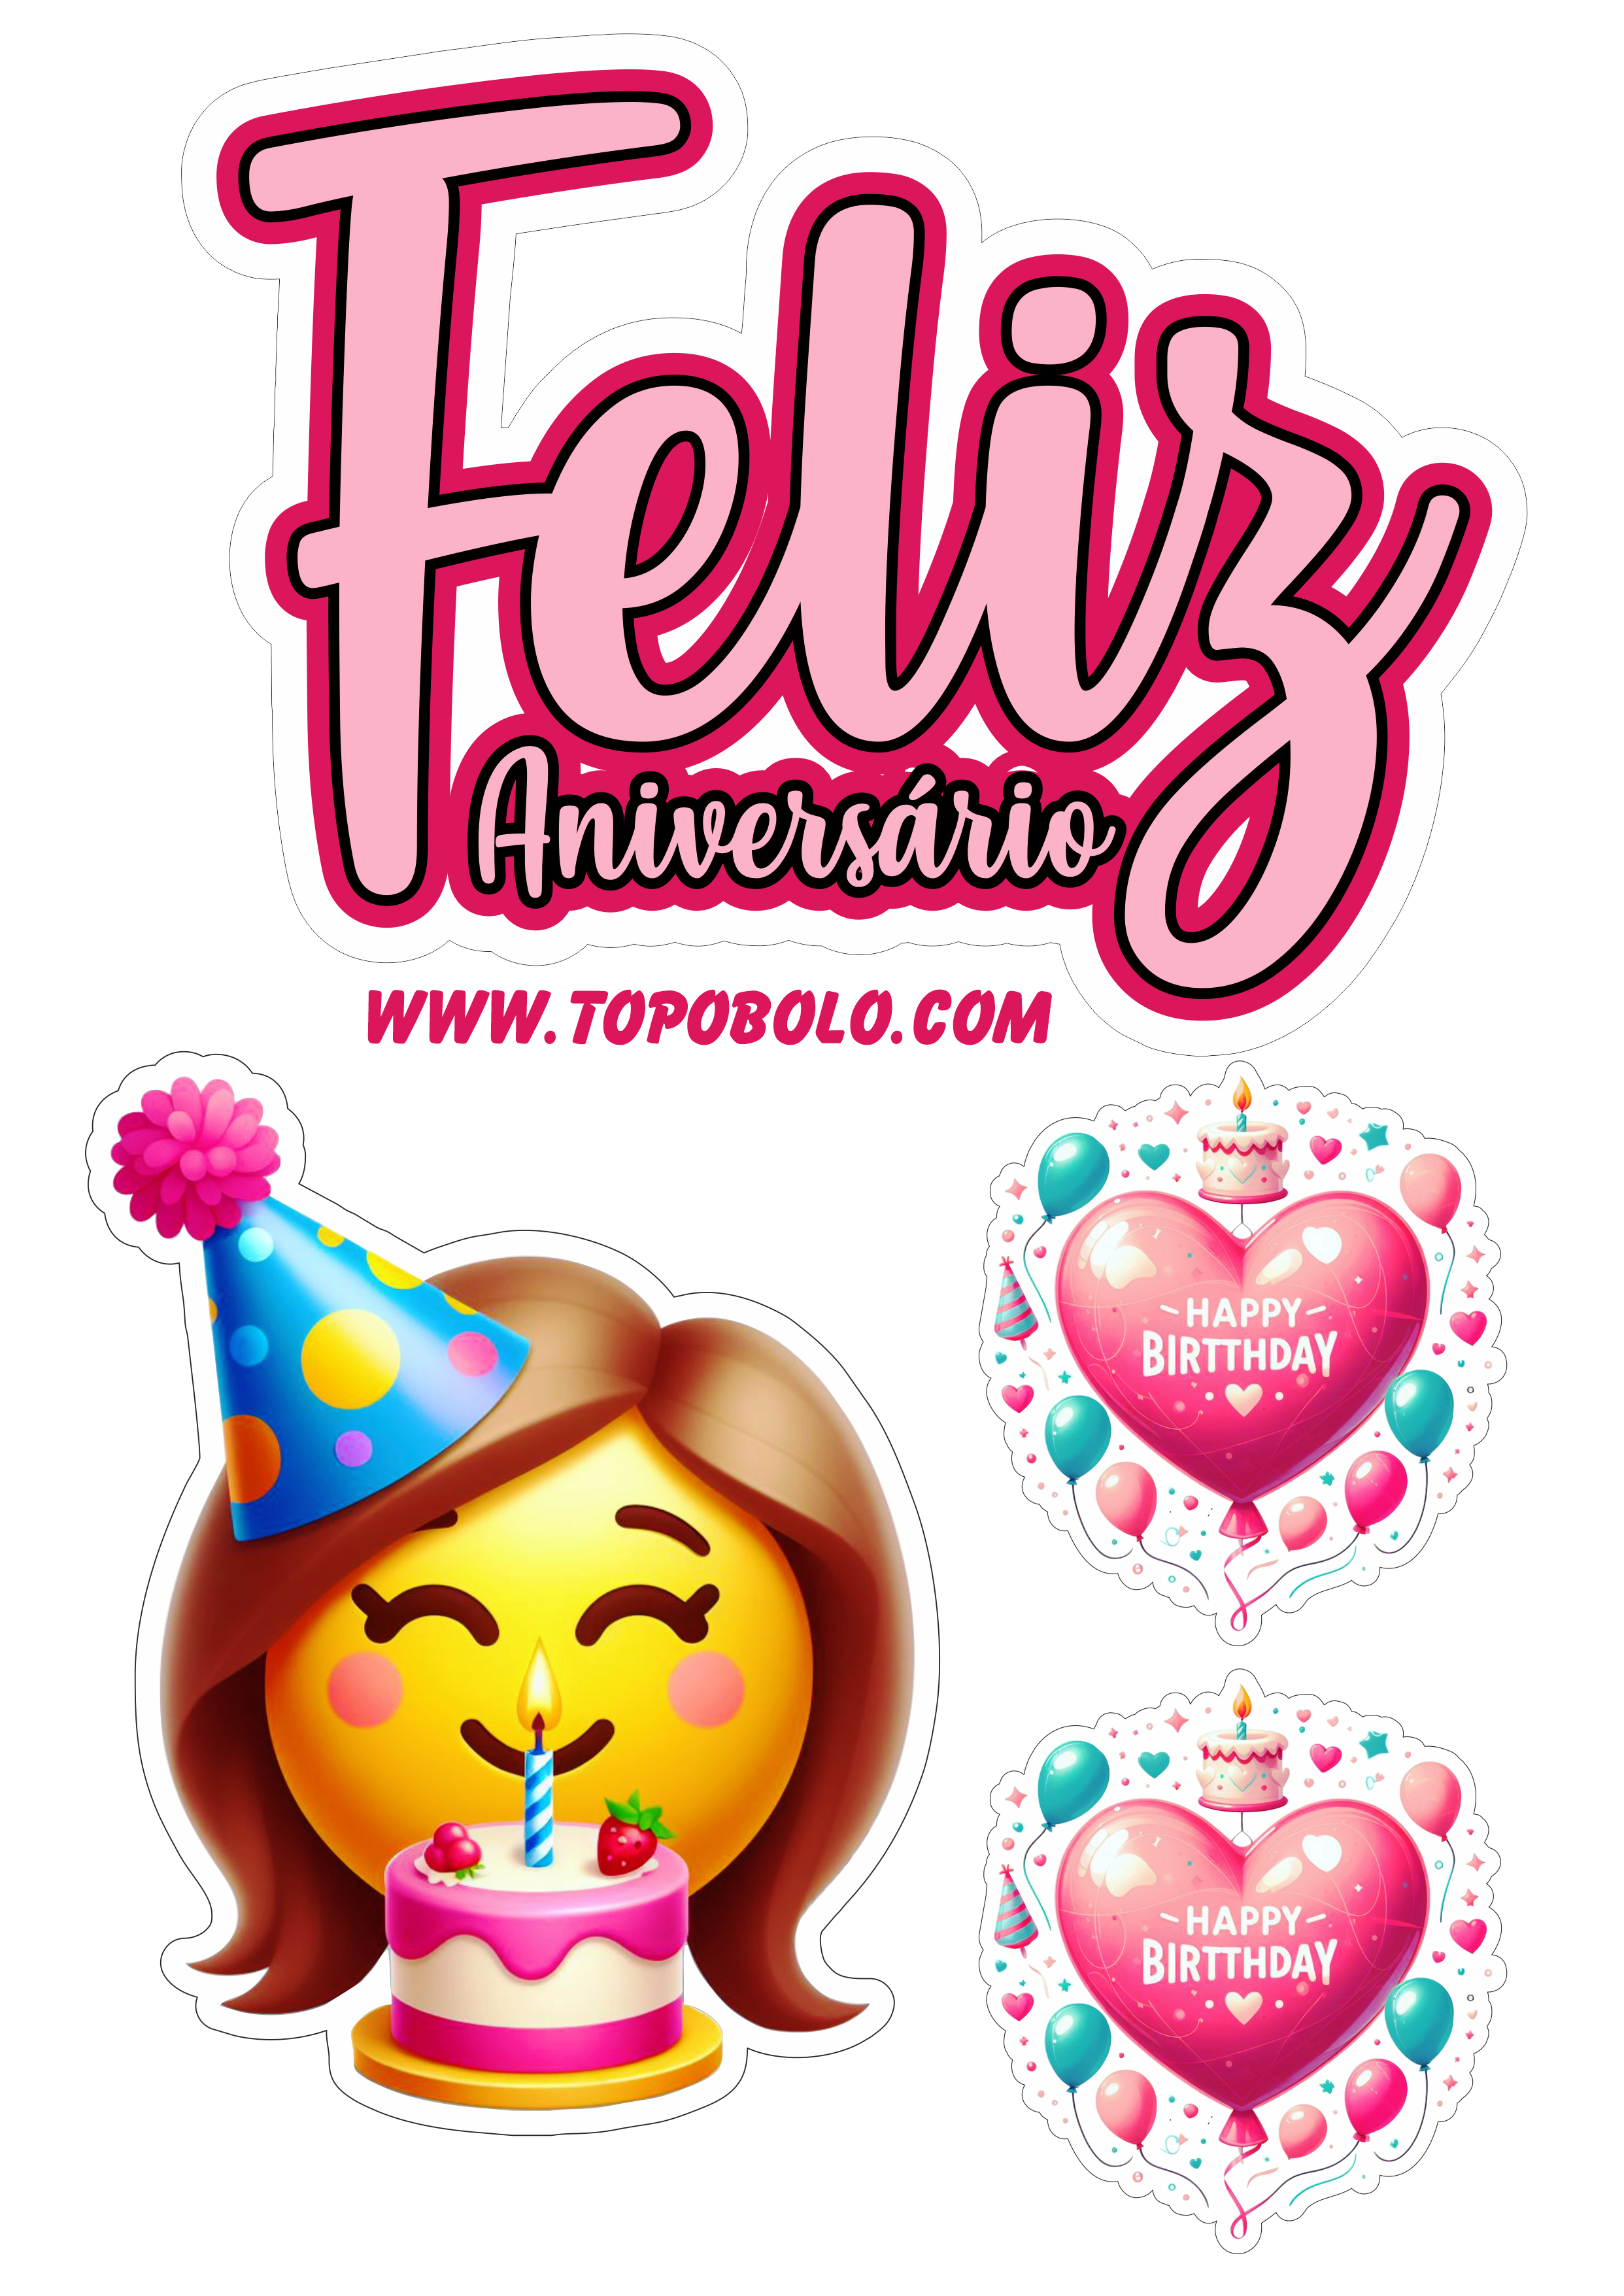 Topo de bolo feliz aniversário emojis engraçados festa pronta papelaria emoticon smiley png